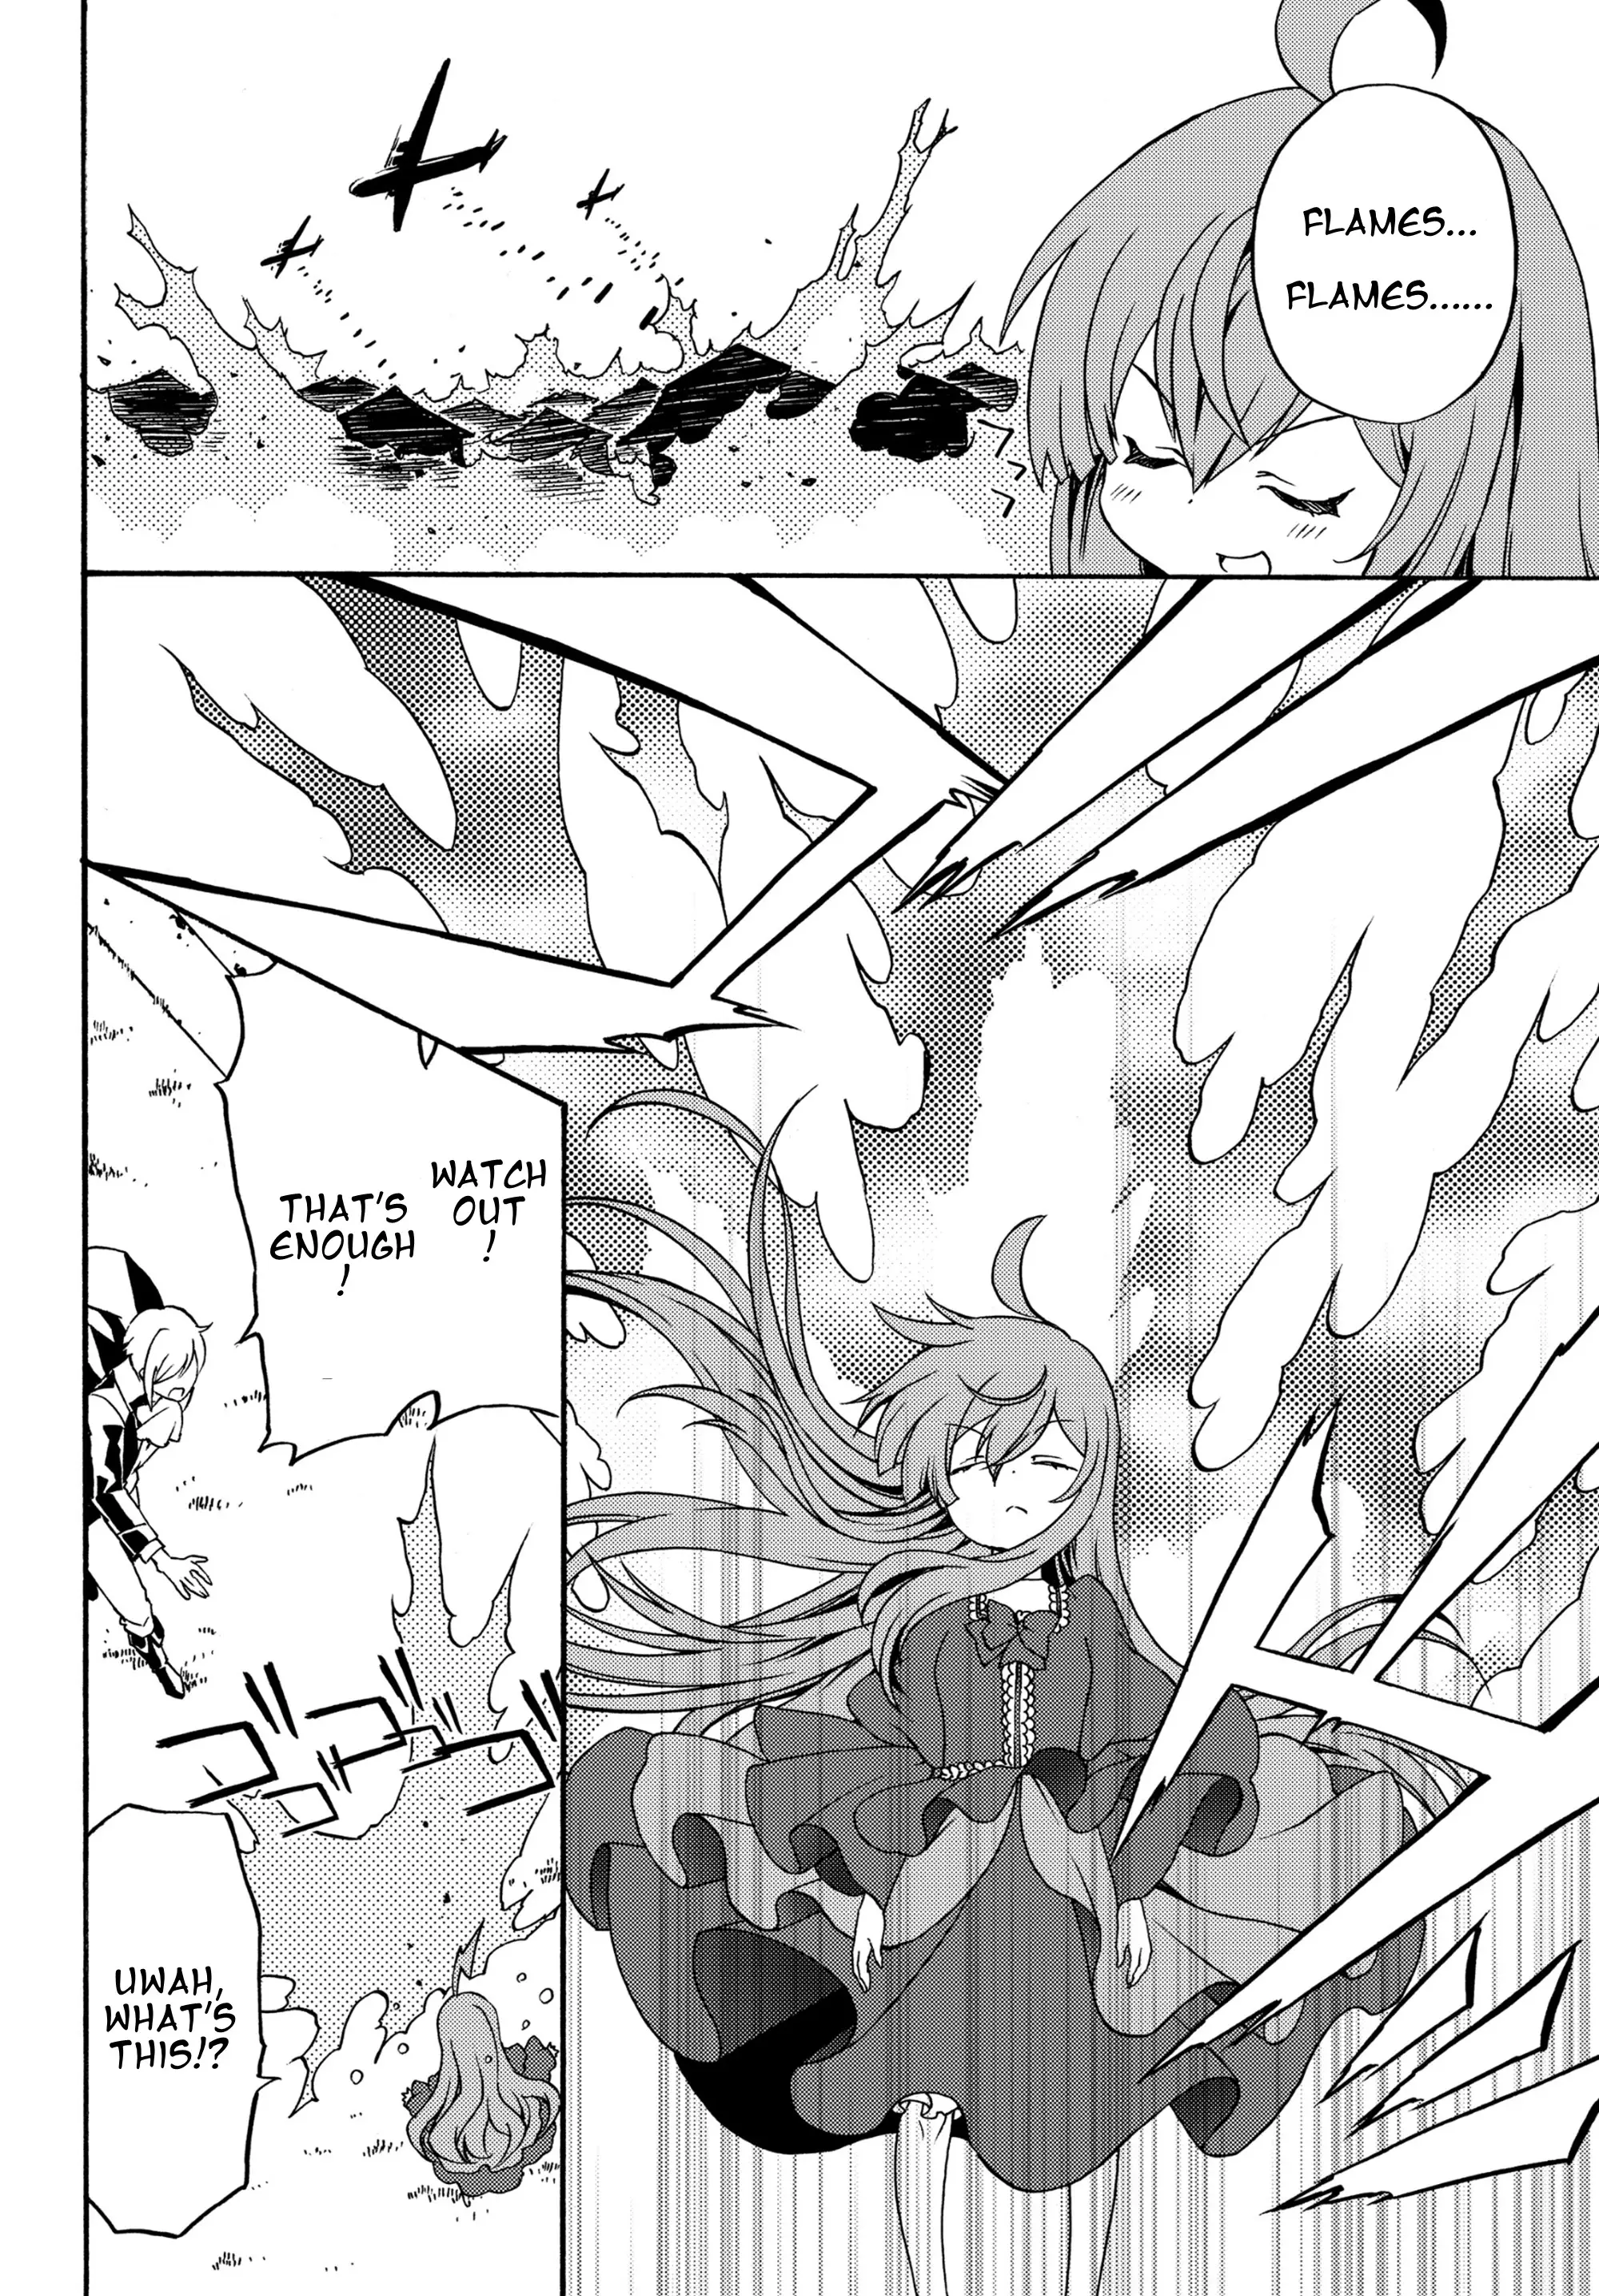 The Villainess Will Crush Her Destruction End Through Modern Firepower - 3 page 4